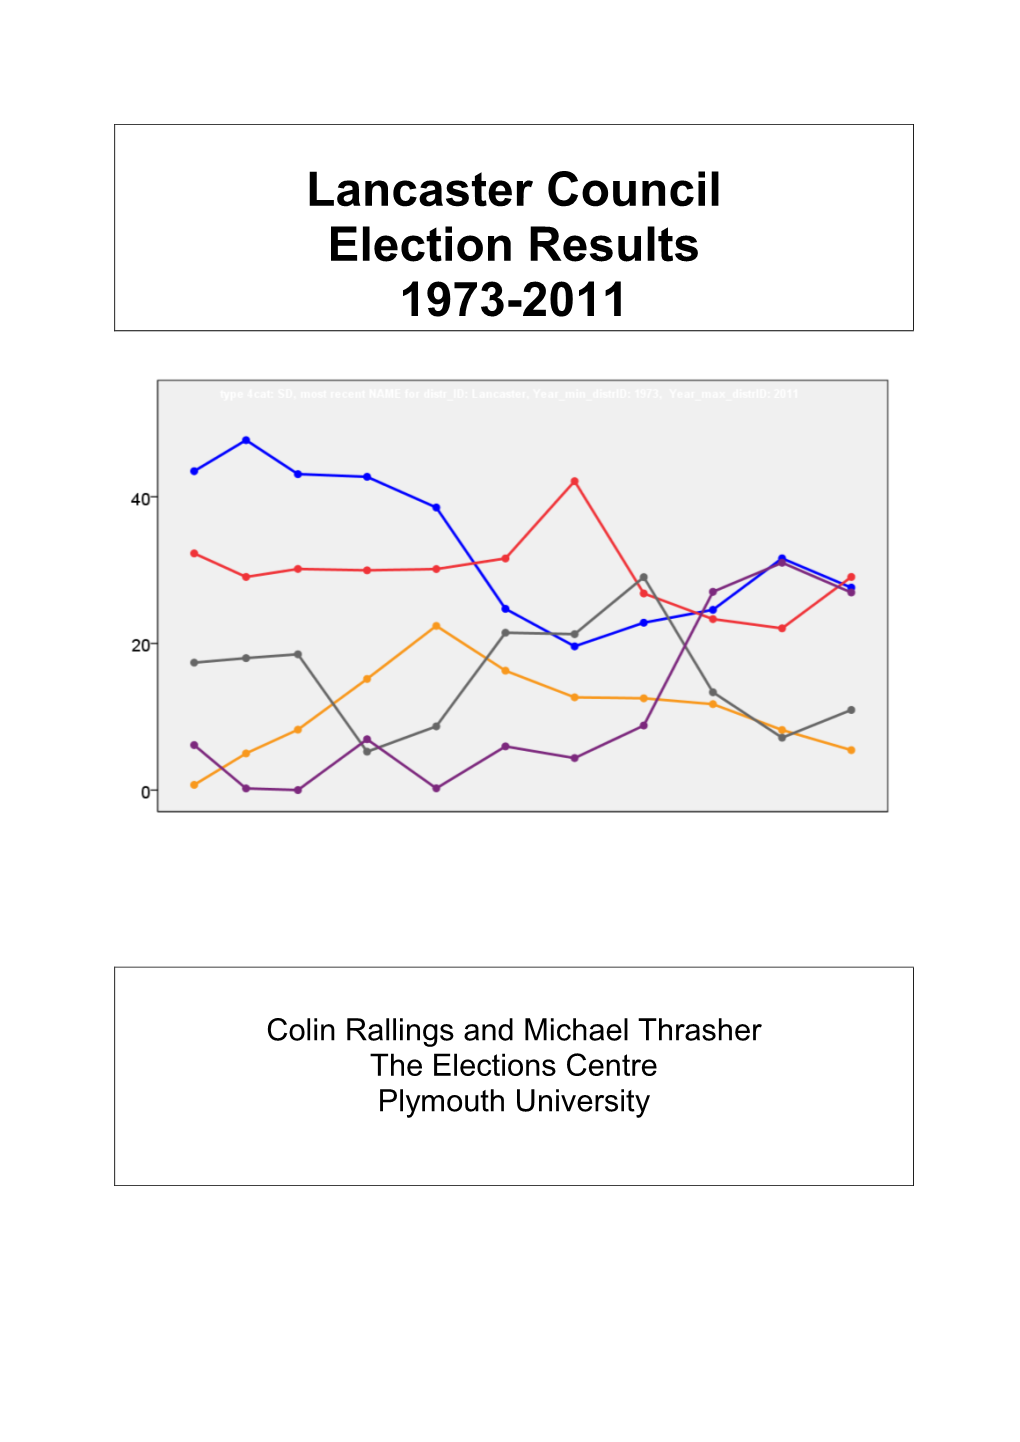 Lancaster Council Election Results 1973-2011